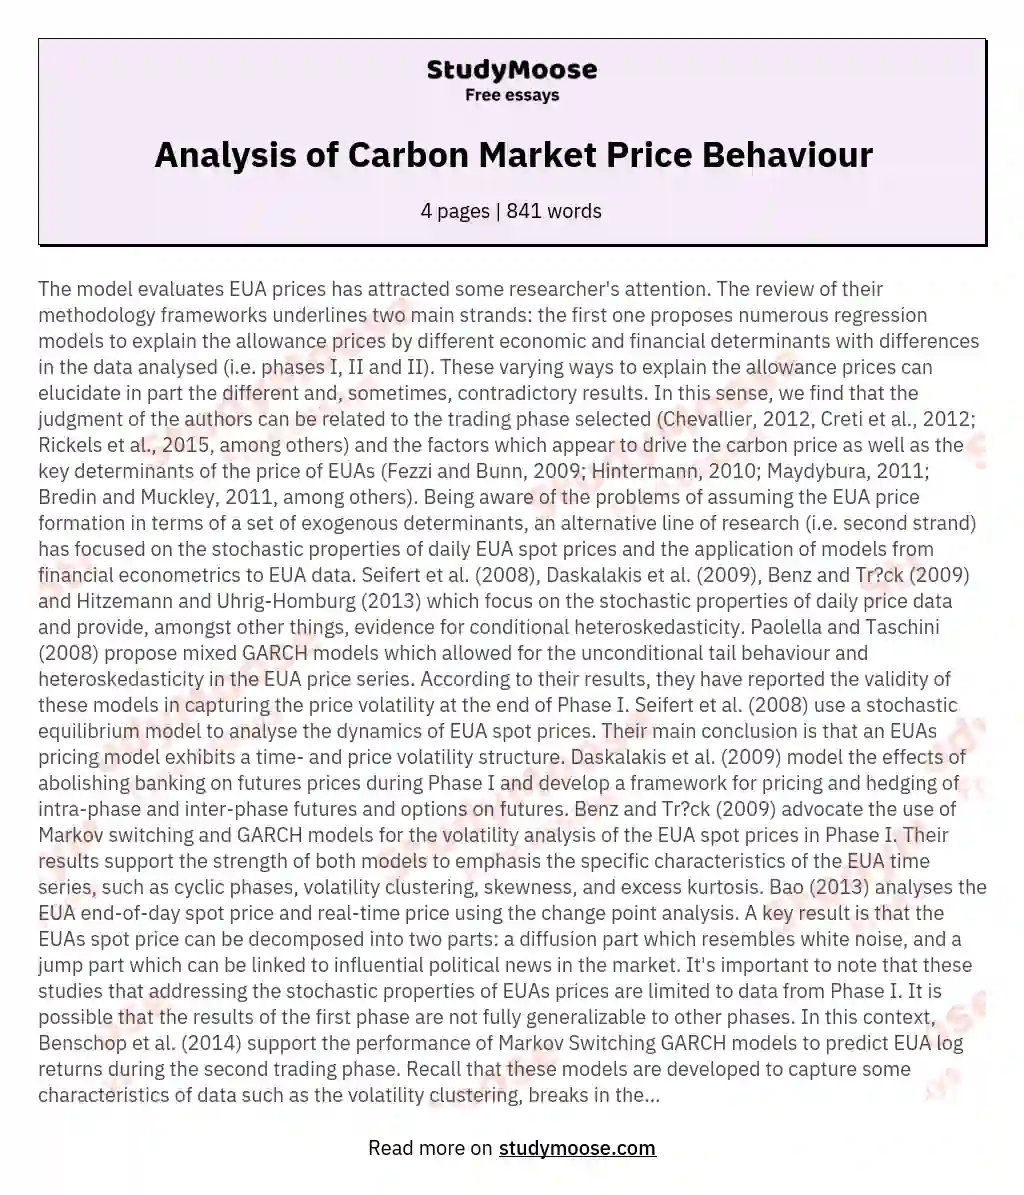 Analysis of Carbon Market Price Behaviour essay